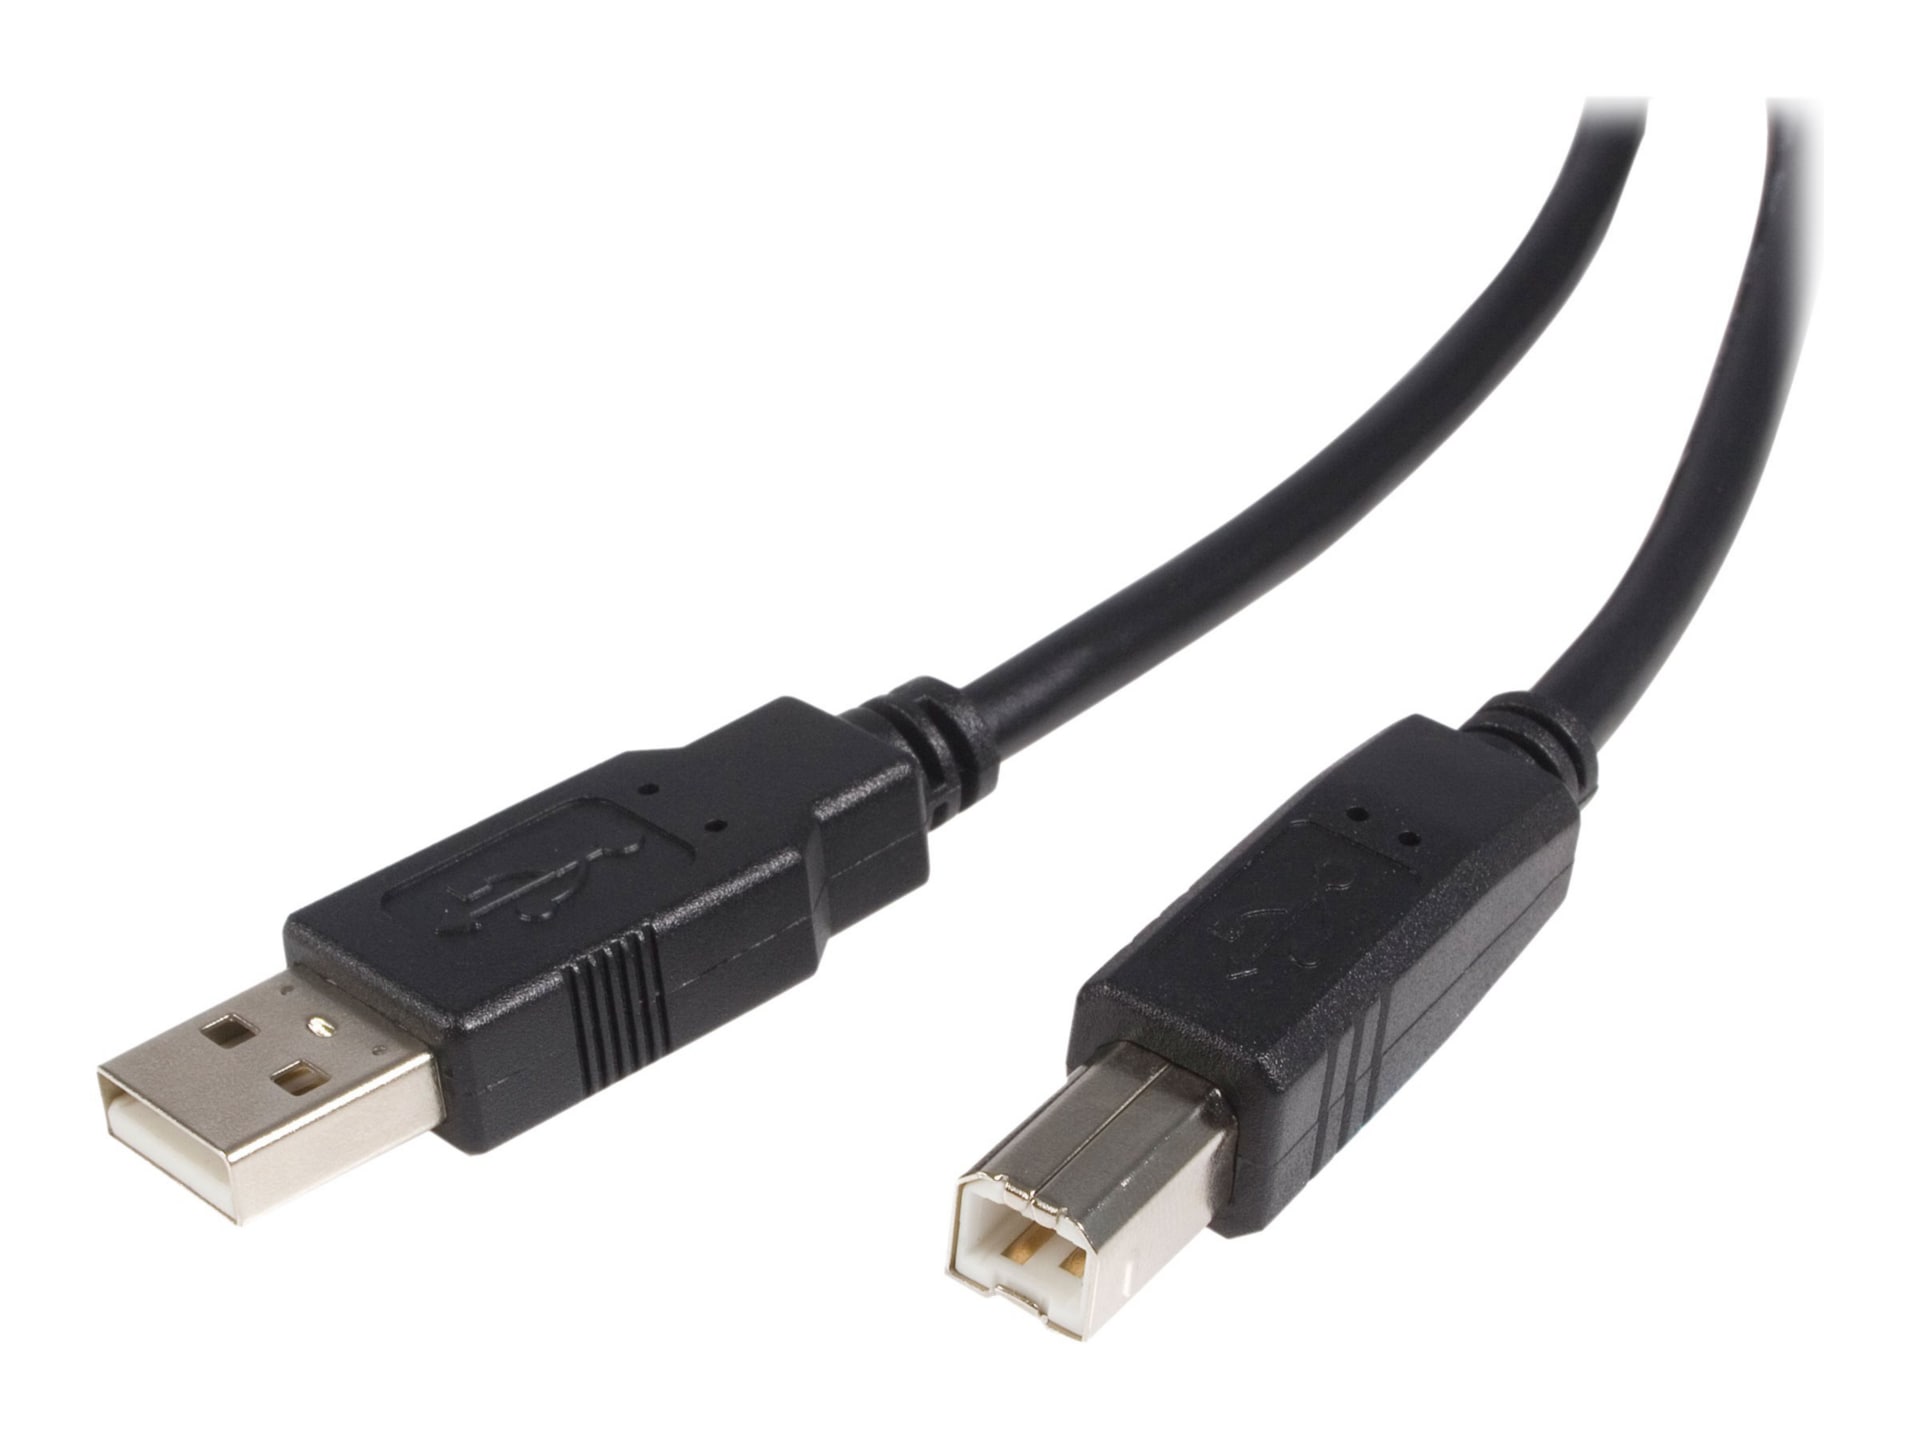 StarTech.com High Speed Certified USB 2.0 - USB cable - 4 pin USB Type A (M) - 4 pin USB Type B (M) - 3 m ( USB /